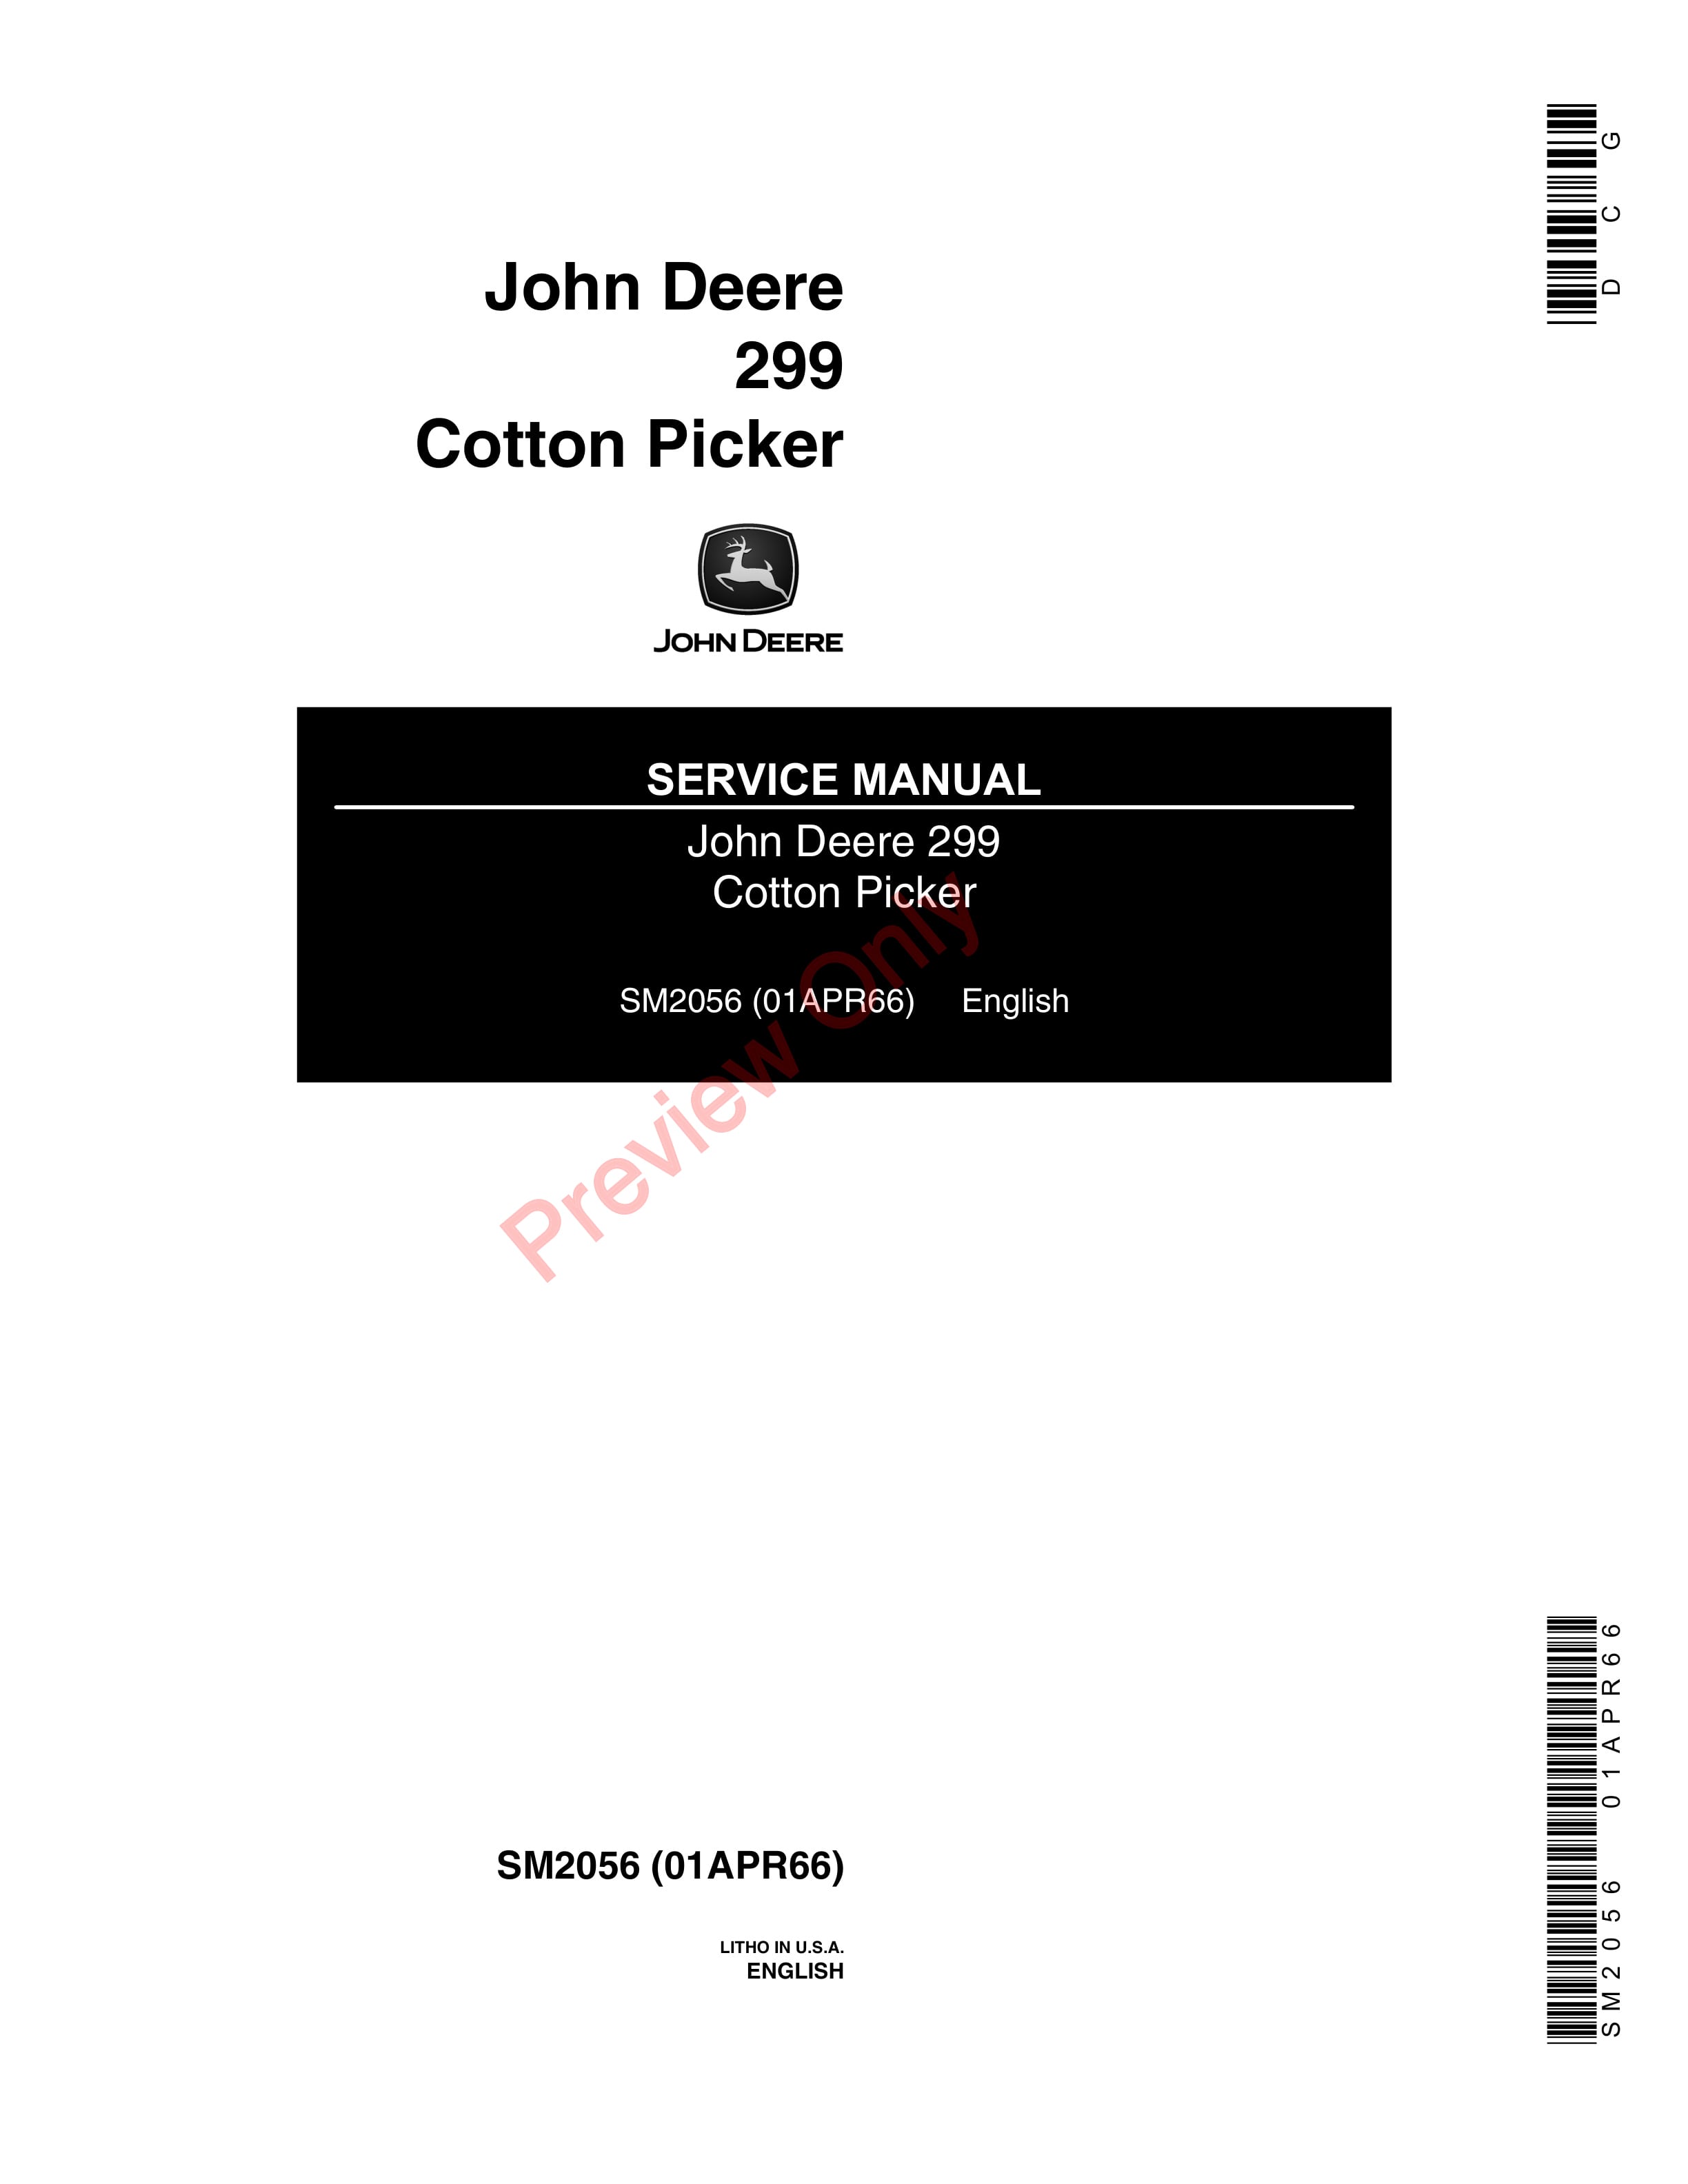 John Deere 299 Cotton Picker Service Manual SM2056 01APR66-1